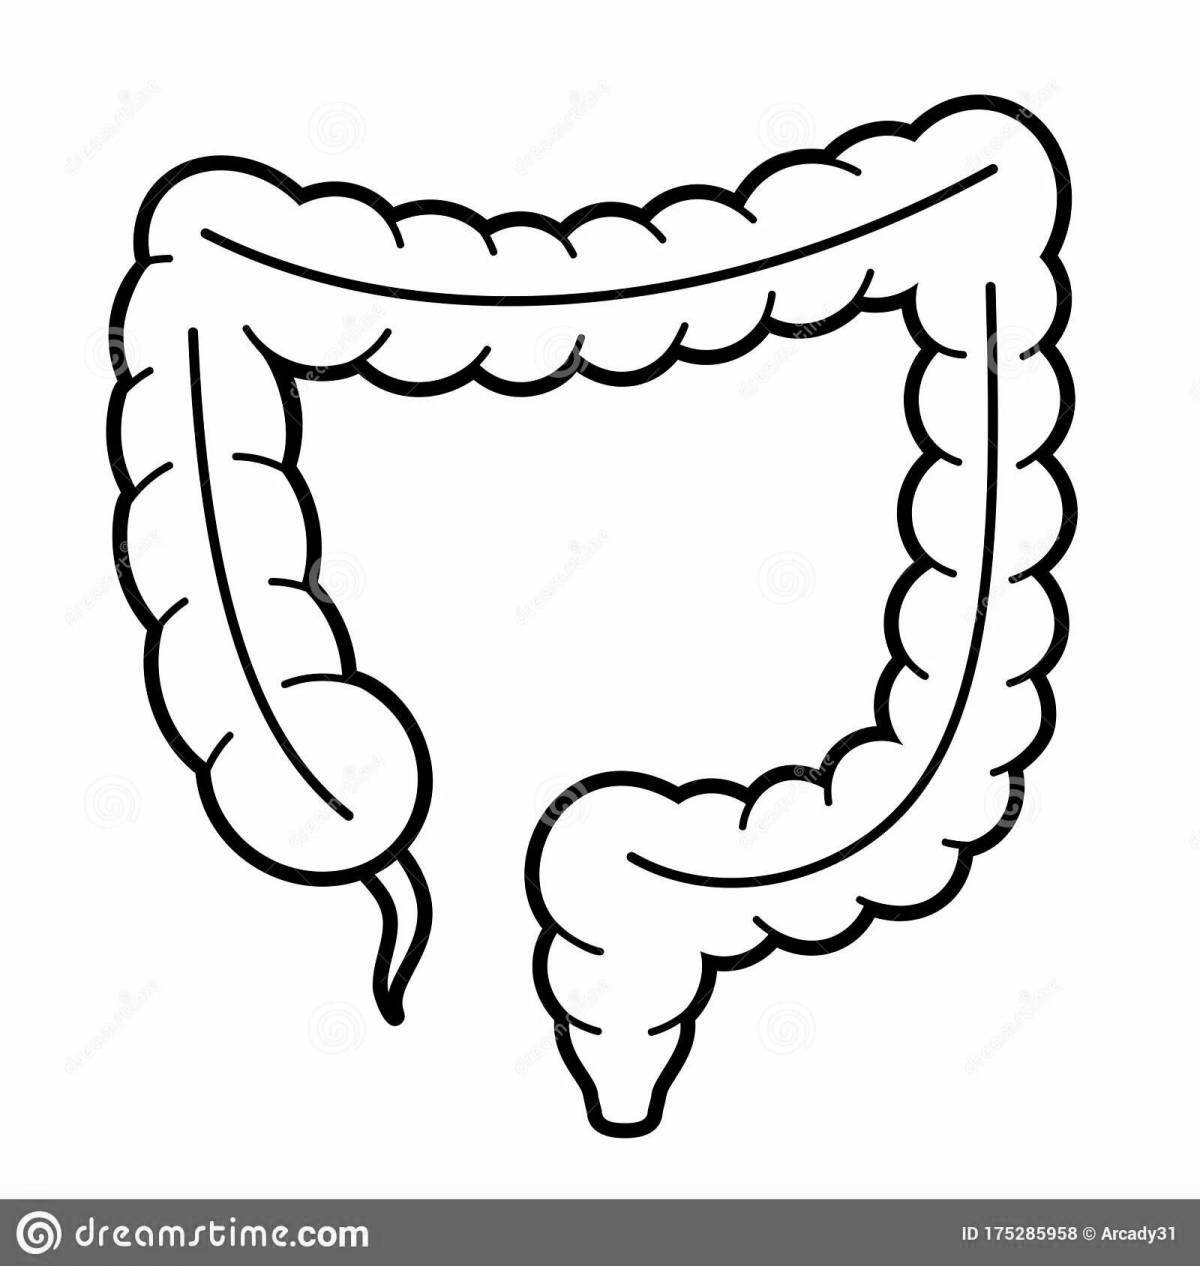 Adorable human intestine coloring book